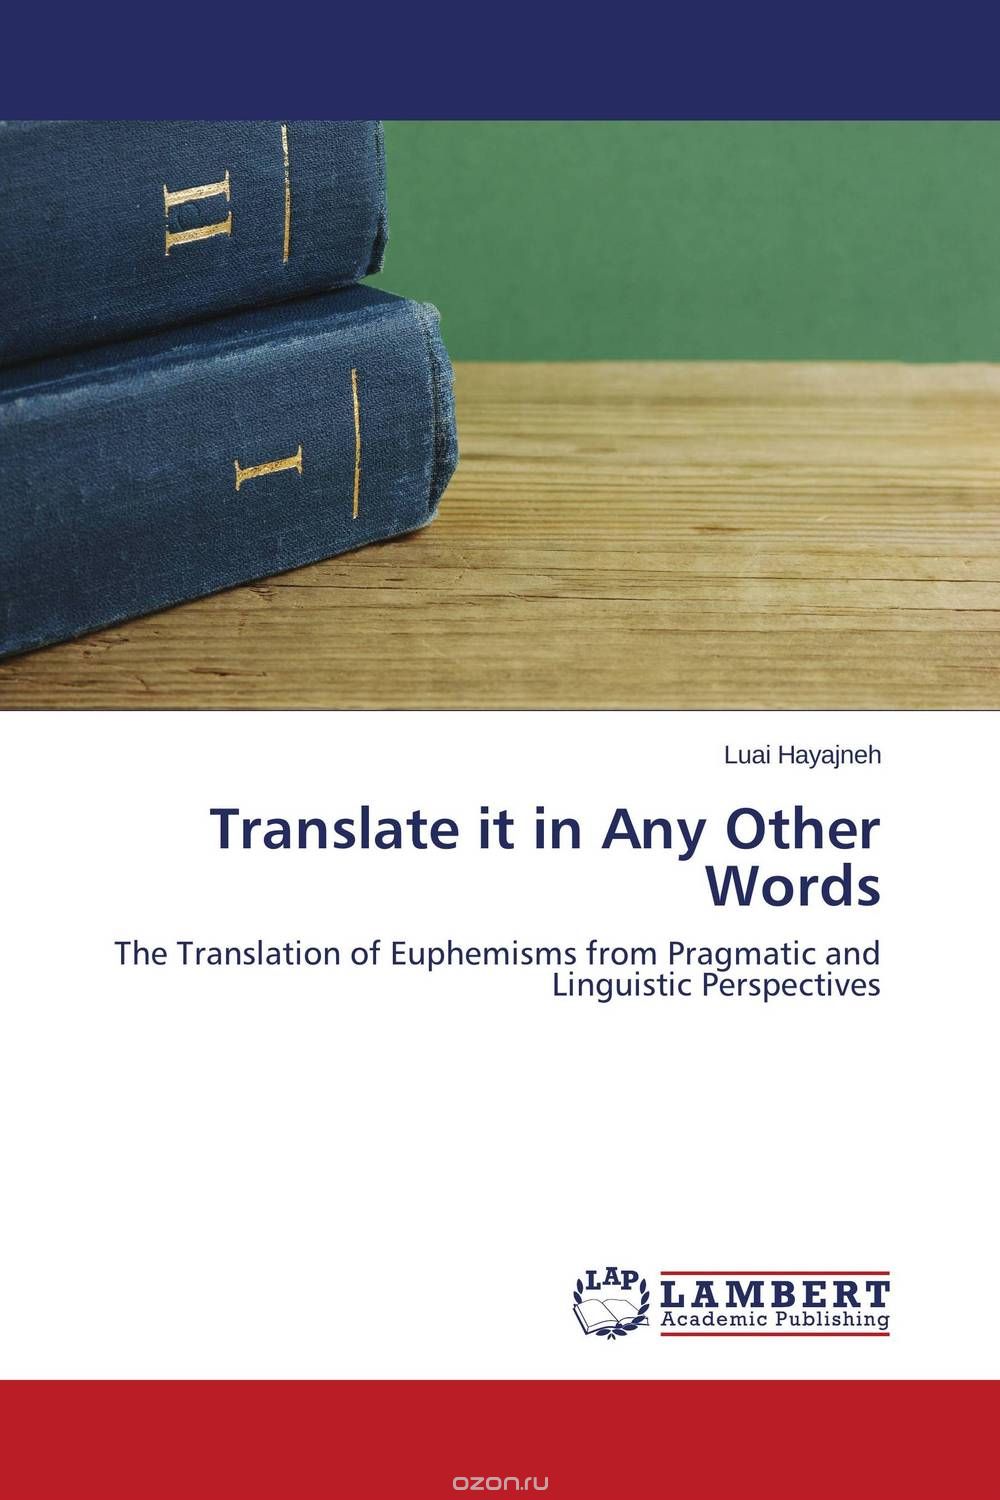 Скачать книгу "Translate it in Any Other Words"